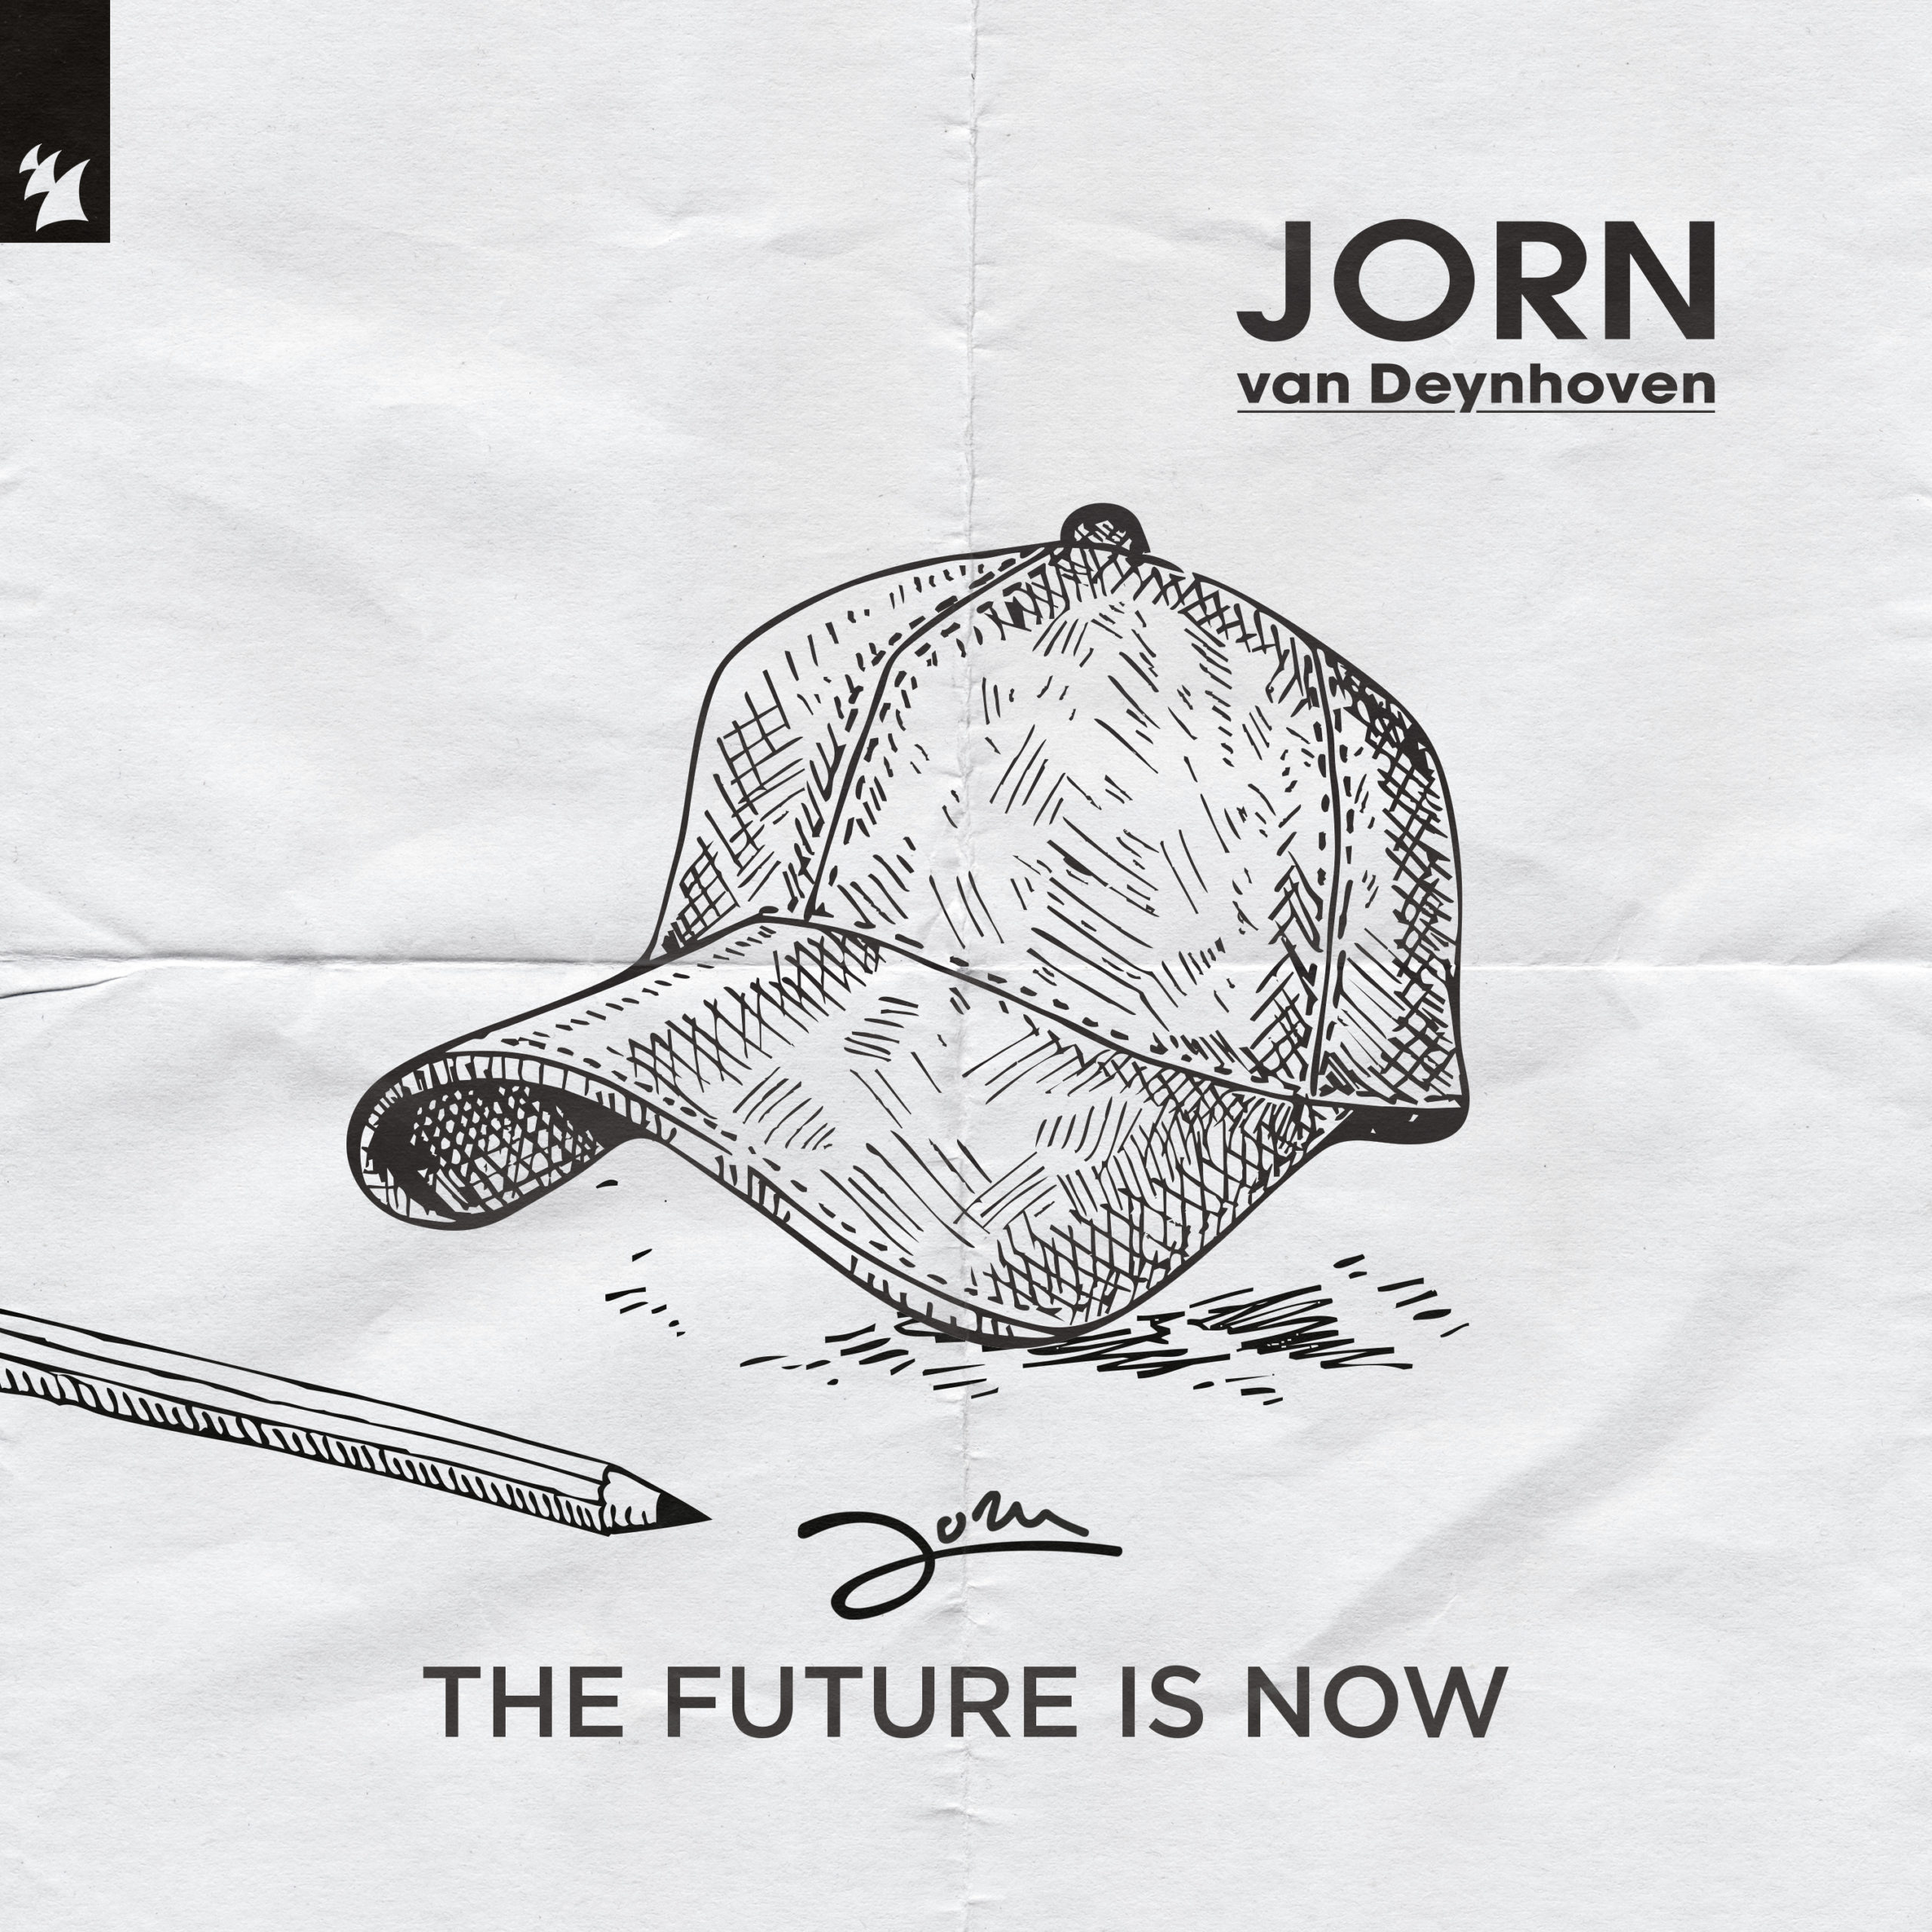 JORN VAN DEYNHOVEN UNLEASHES DEBUT ALBUM: ‘THE FUTURE IS NOW’